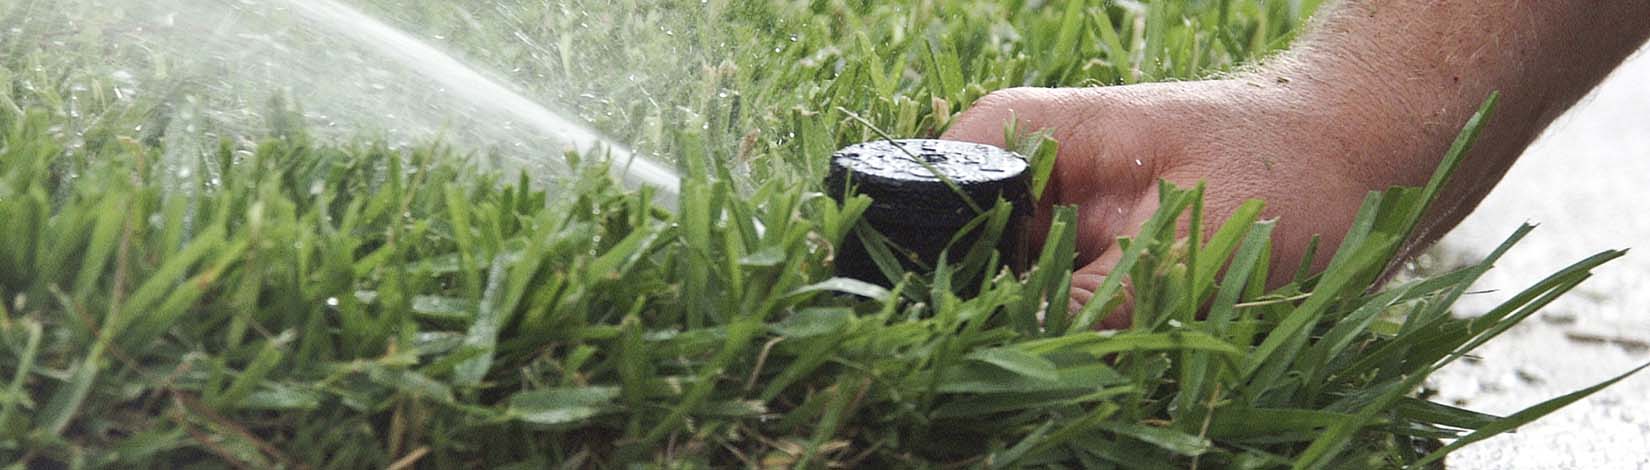 Sprinkler head shooting water for lawn irrigation